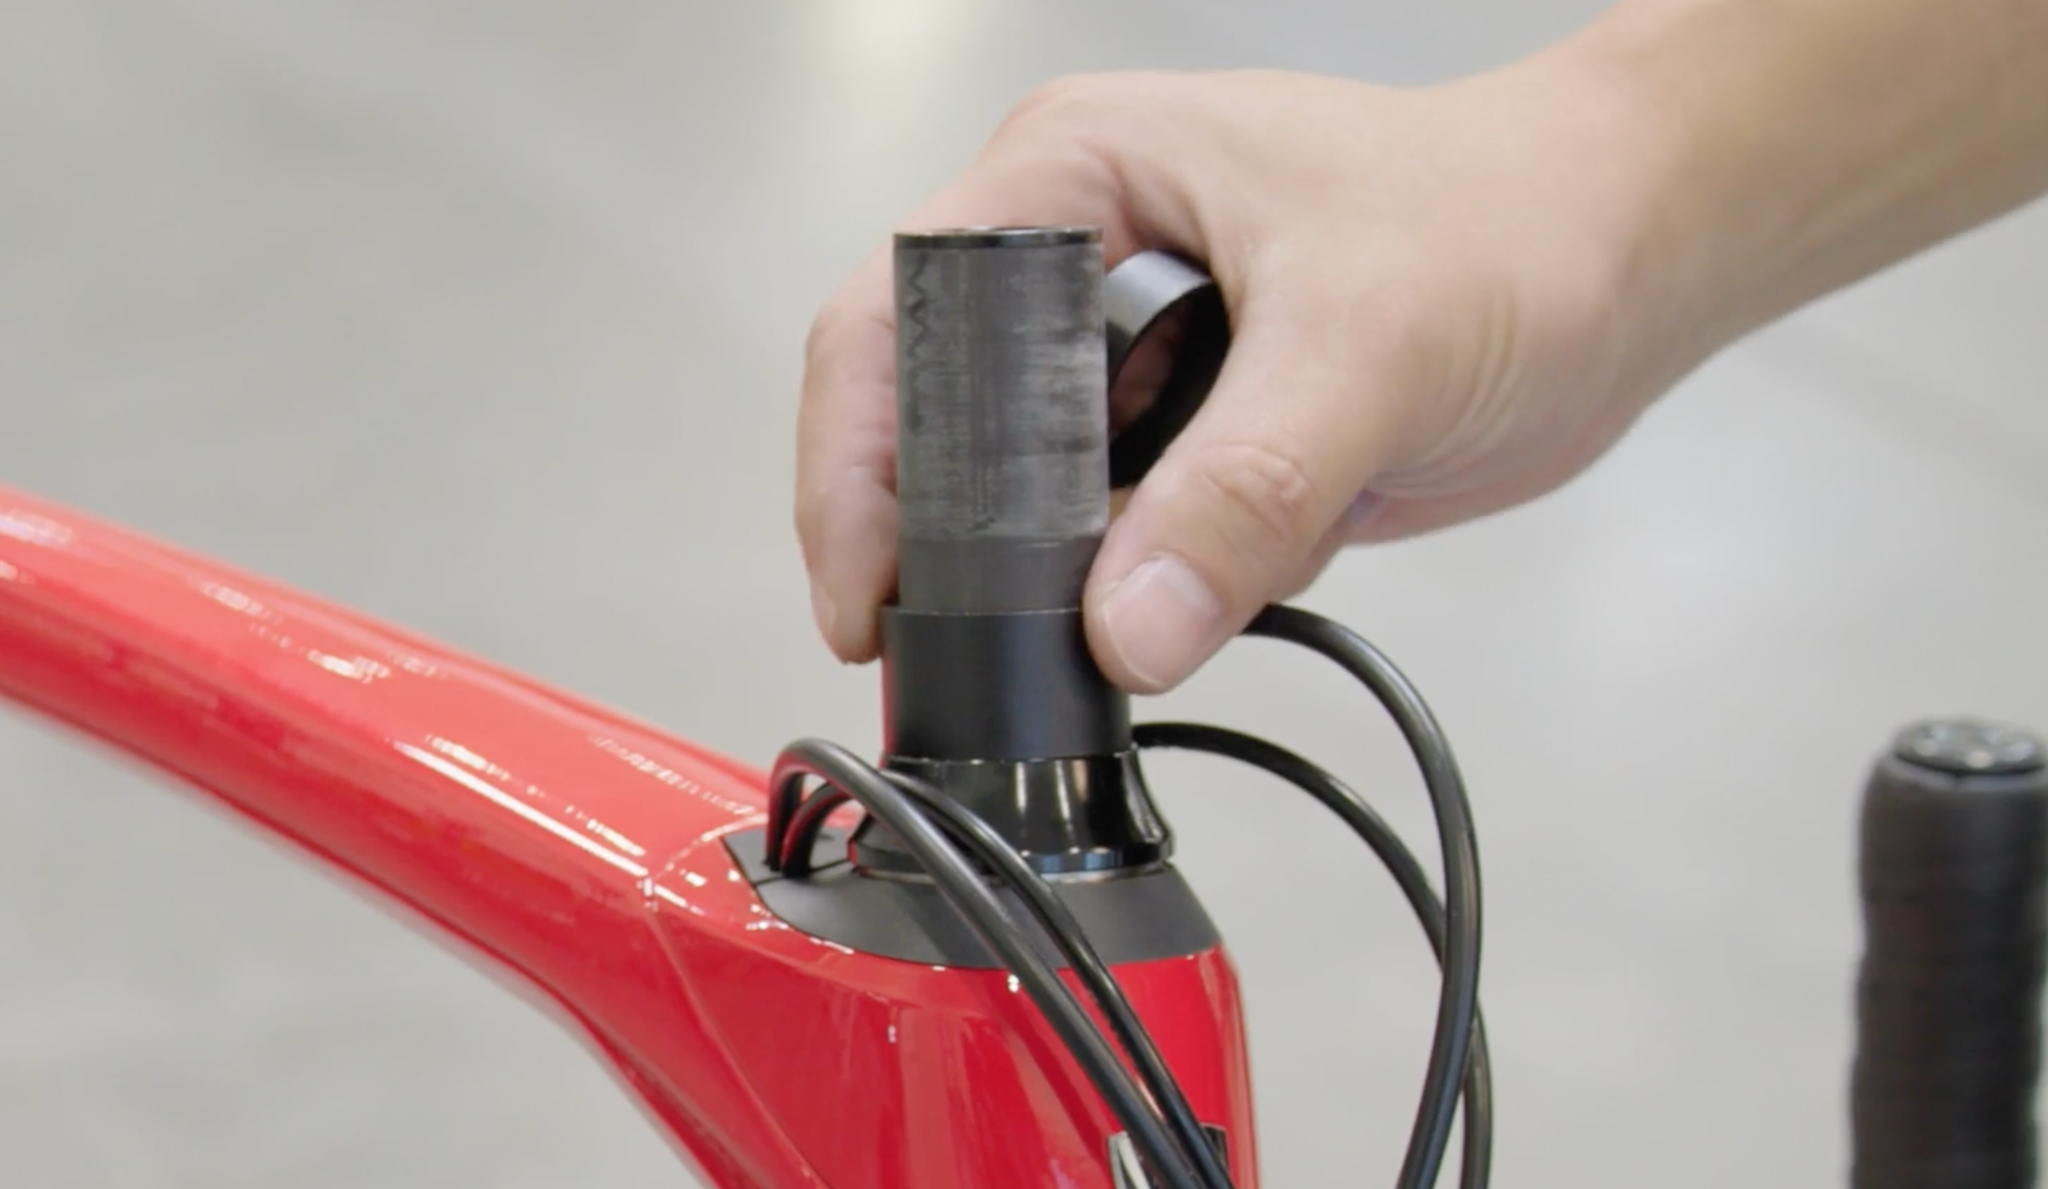 How to adjust or change bike handlebar height